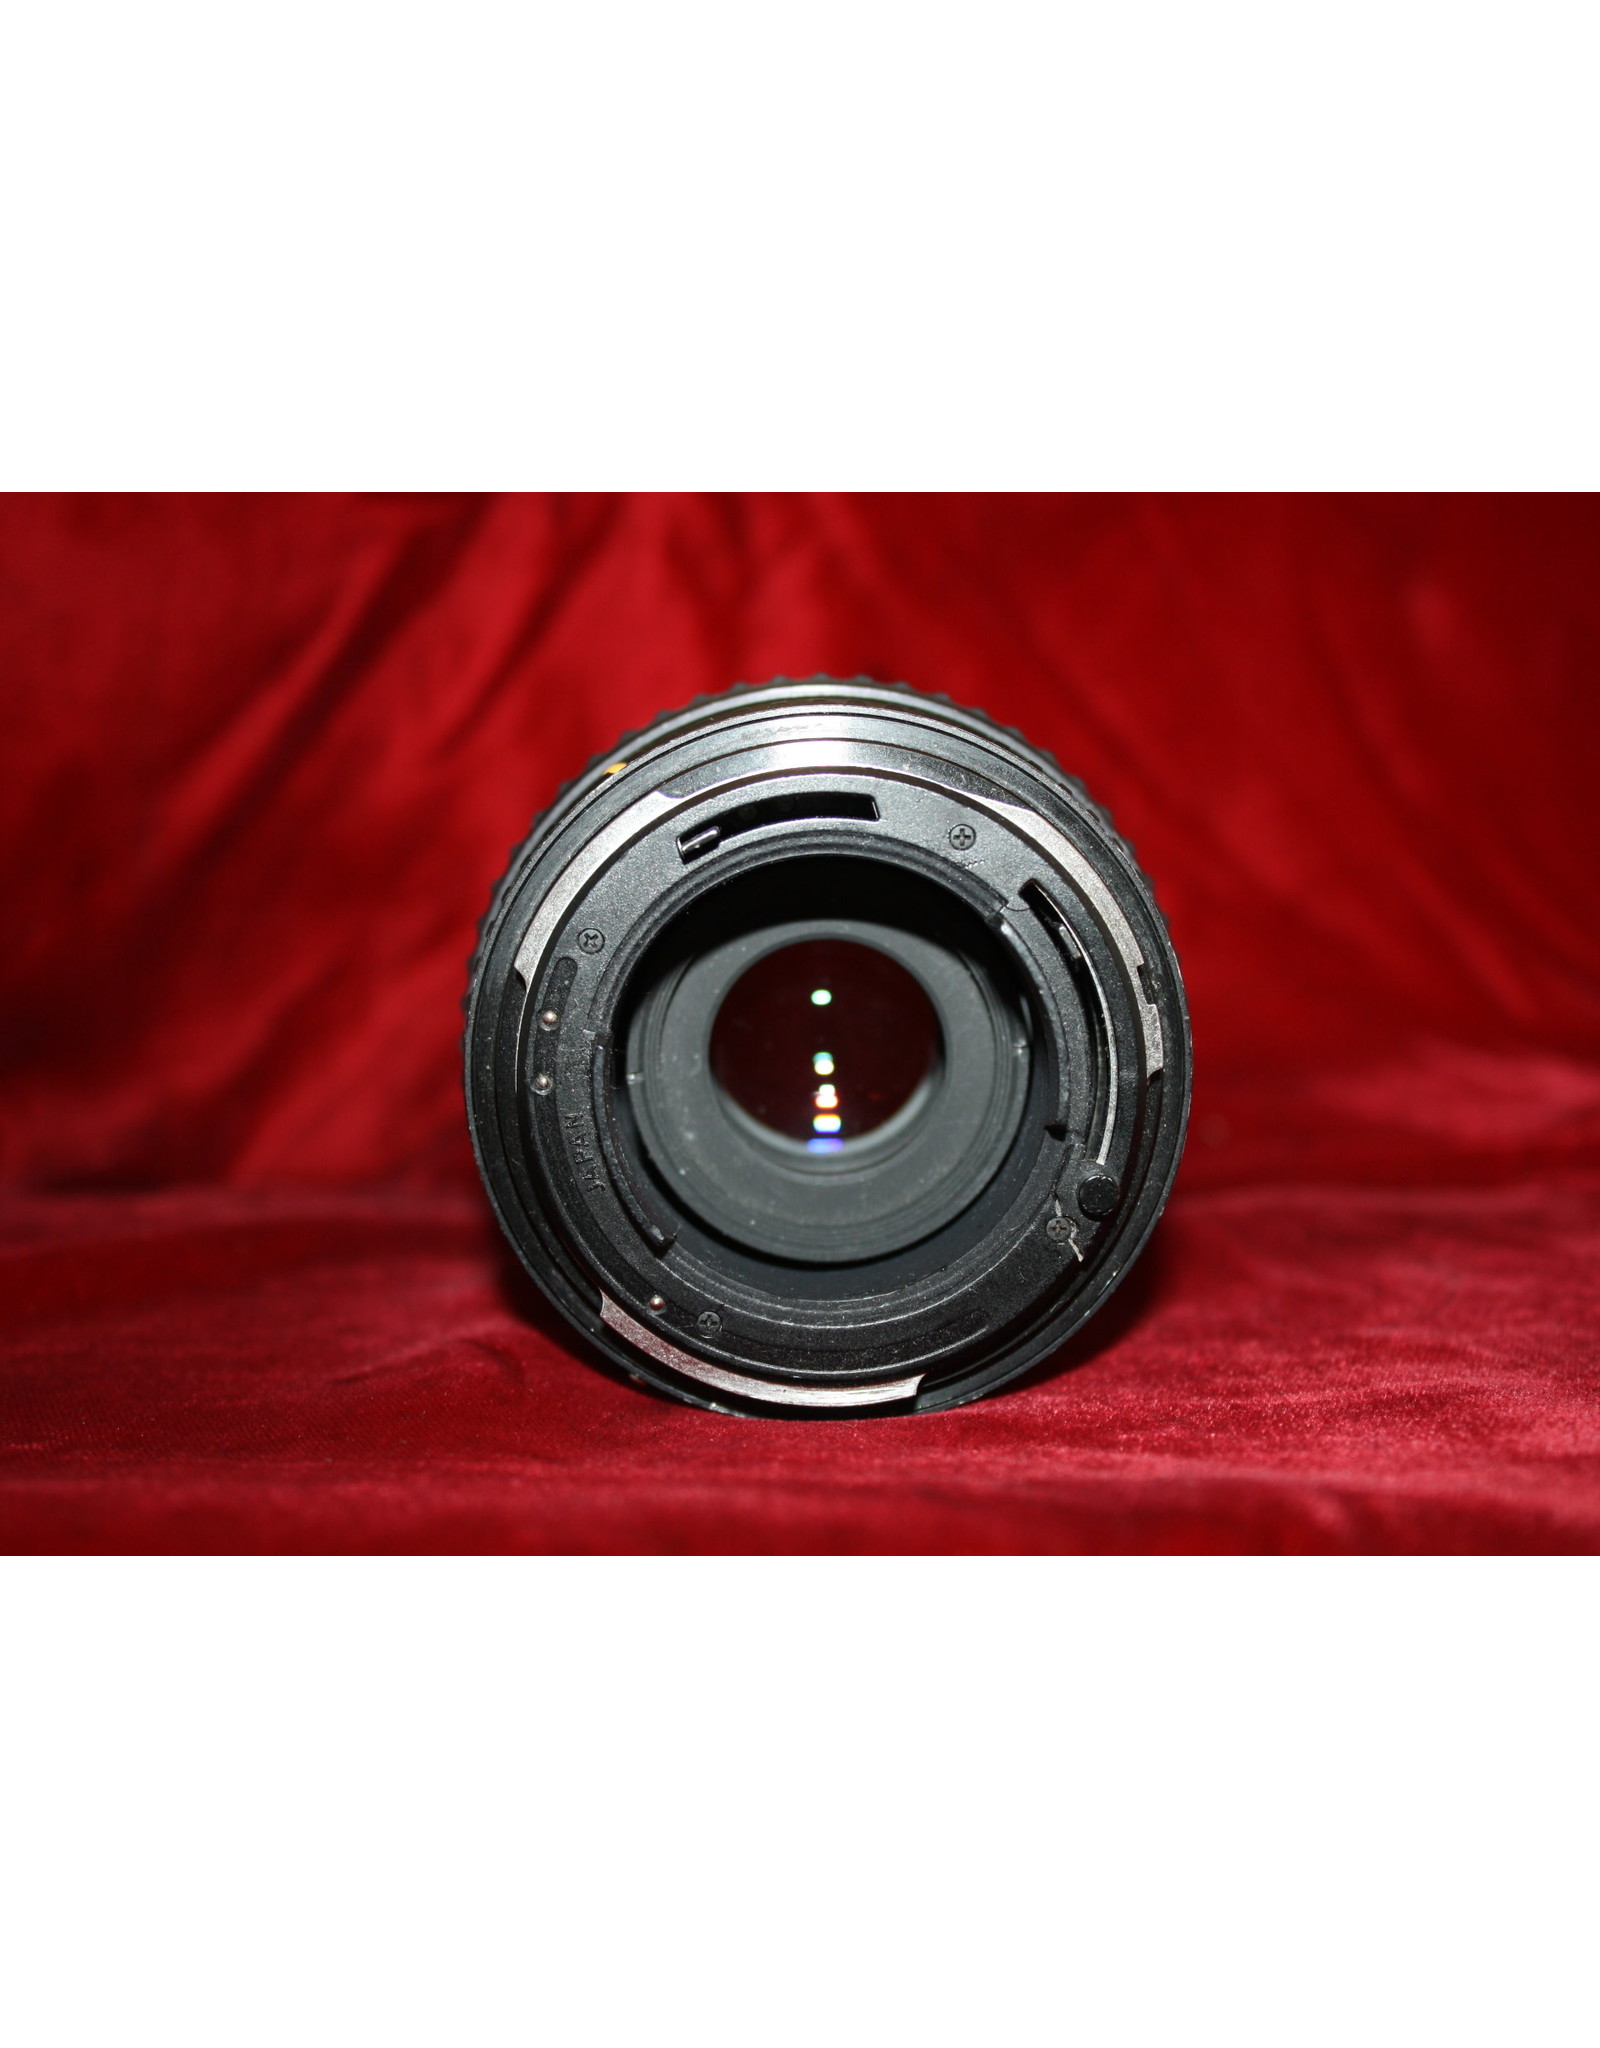 Pentax SMC 645 80-160mm Zoom (AS IS)